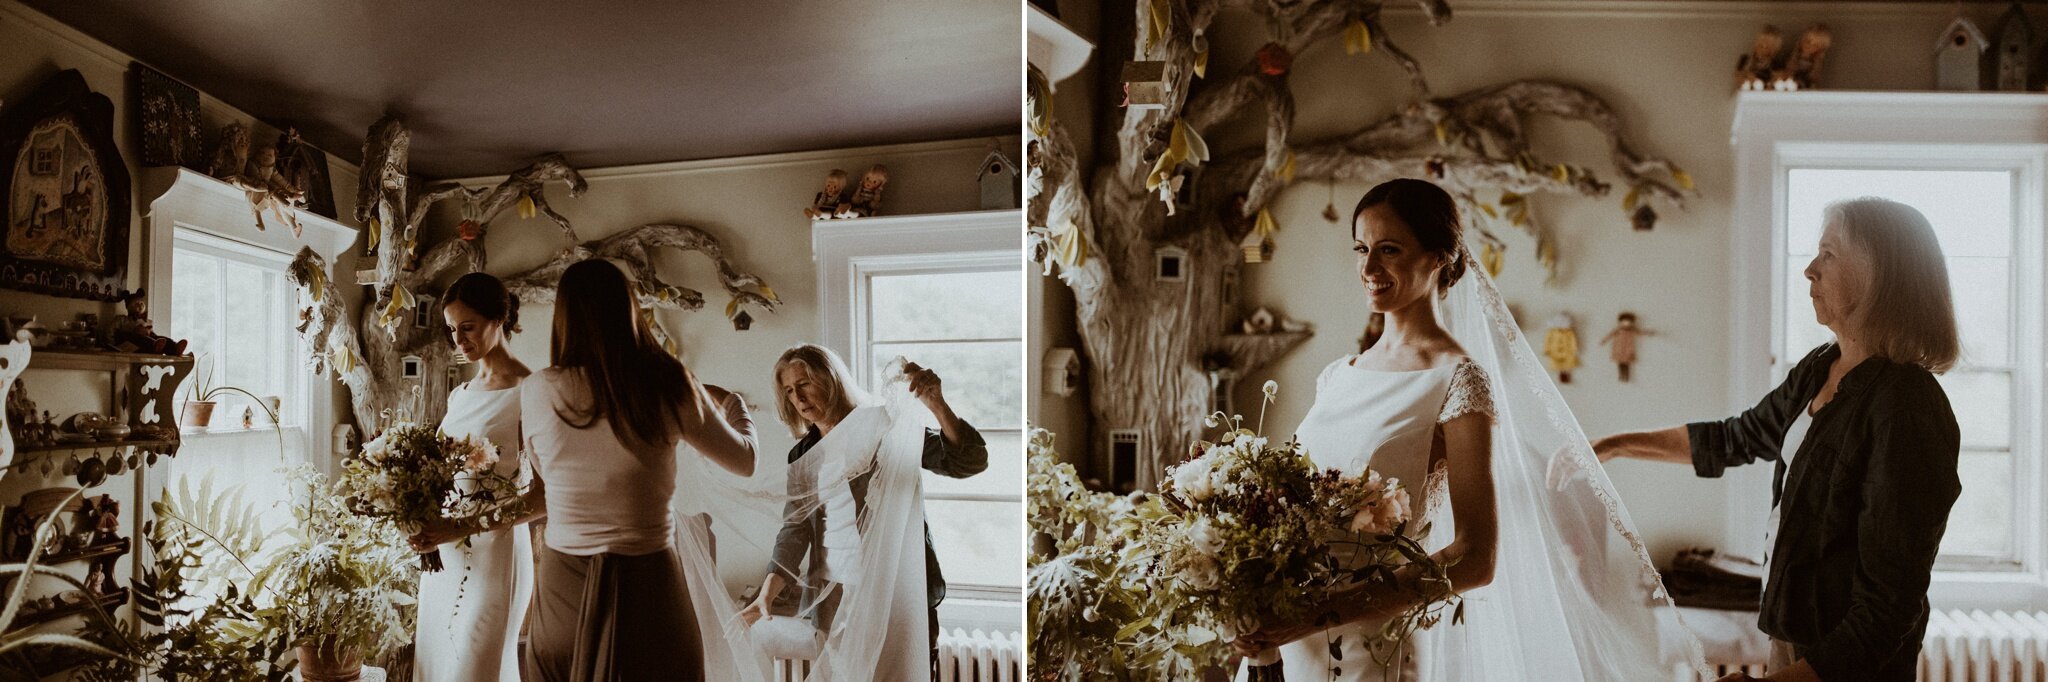 gloriosa-co-curtis-house-wedding-greenfield-western-massachusetts-photographers-vanessaalvesphotography-56.jpg